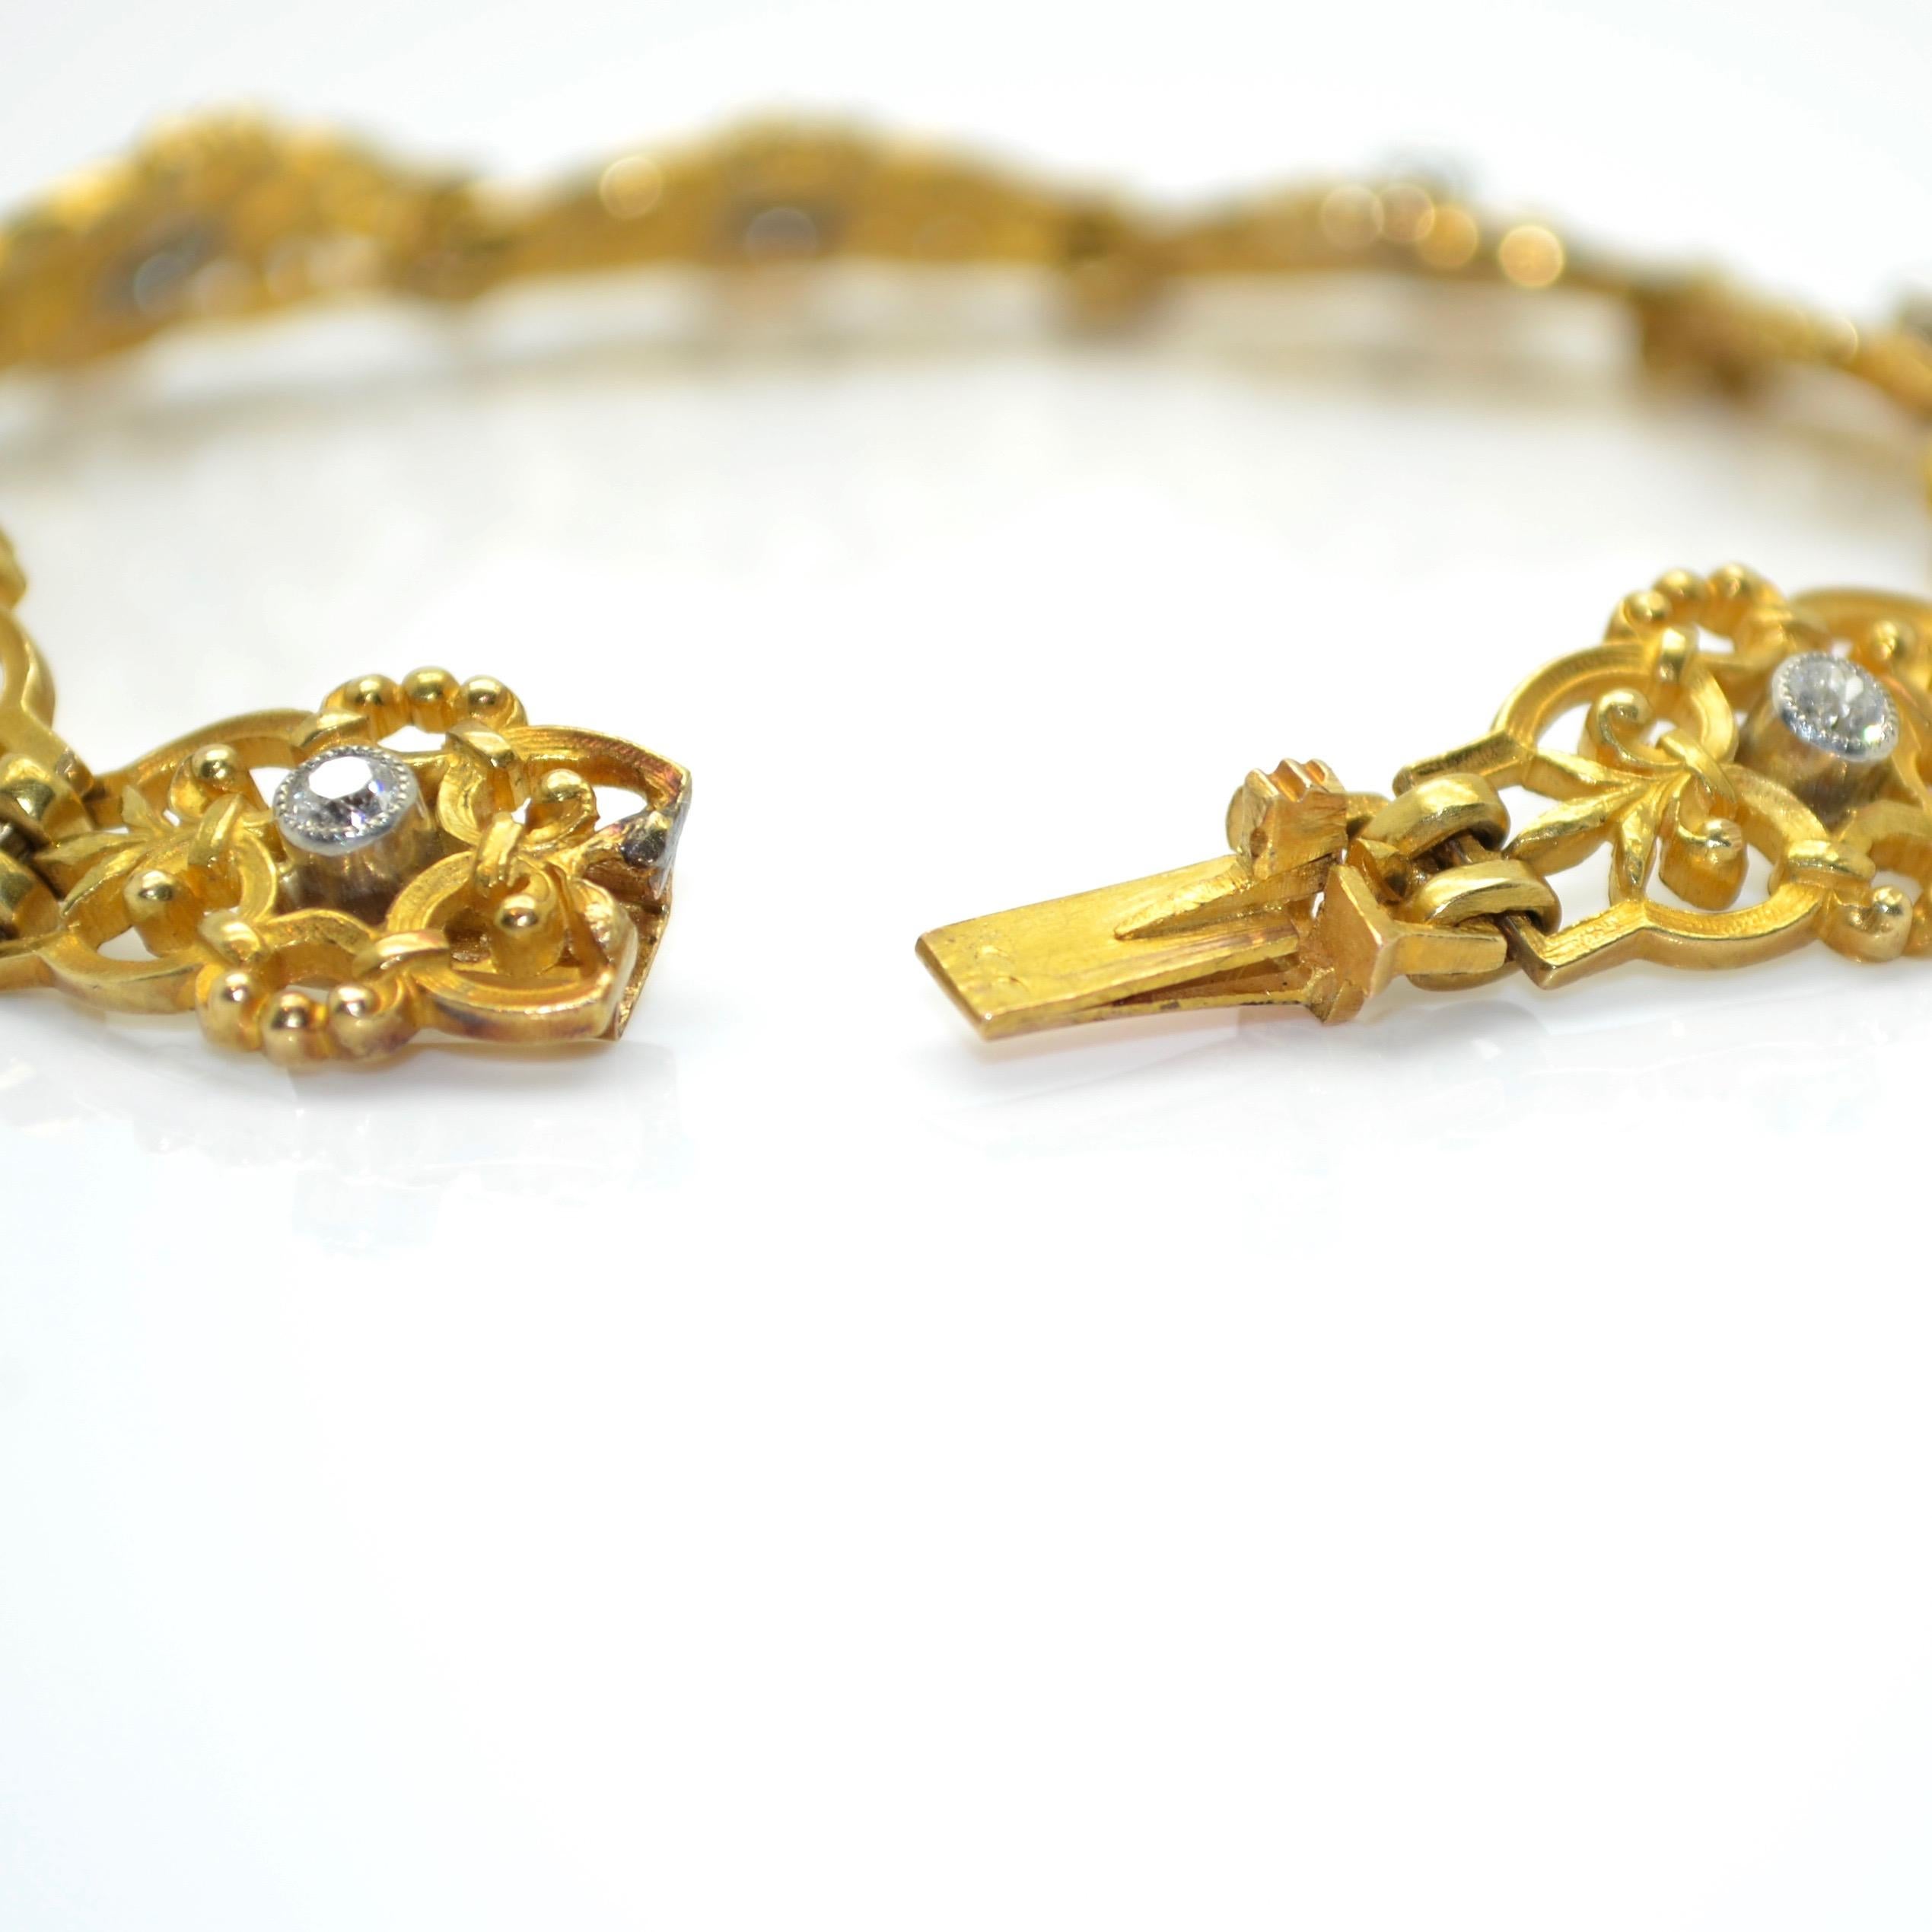 Old European Cut Antique 18 Karat Yellow Gold and Diamonds French Bracelet